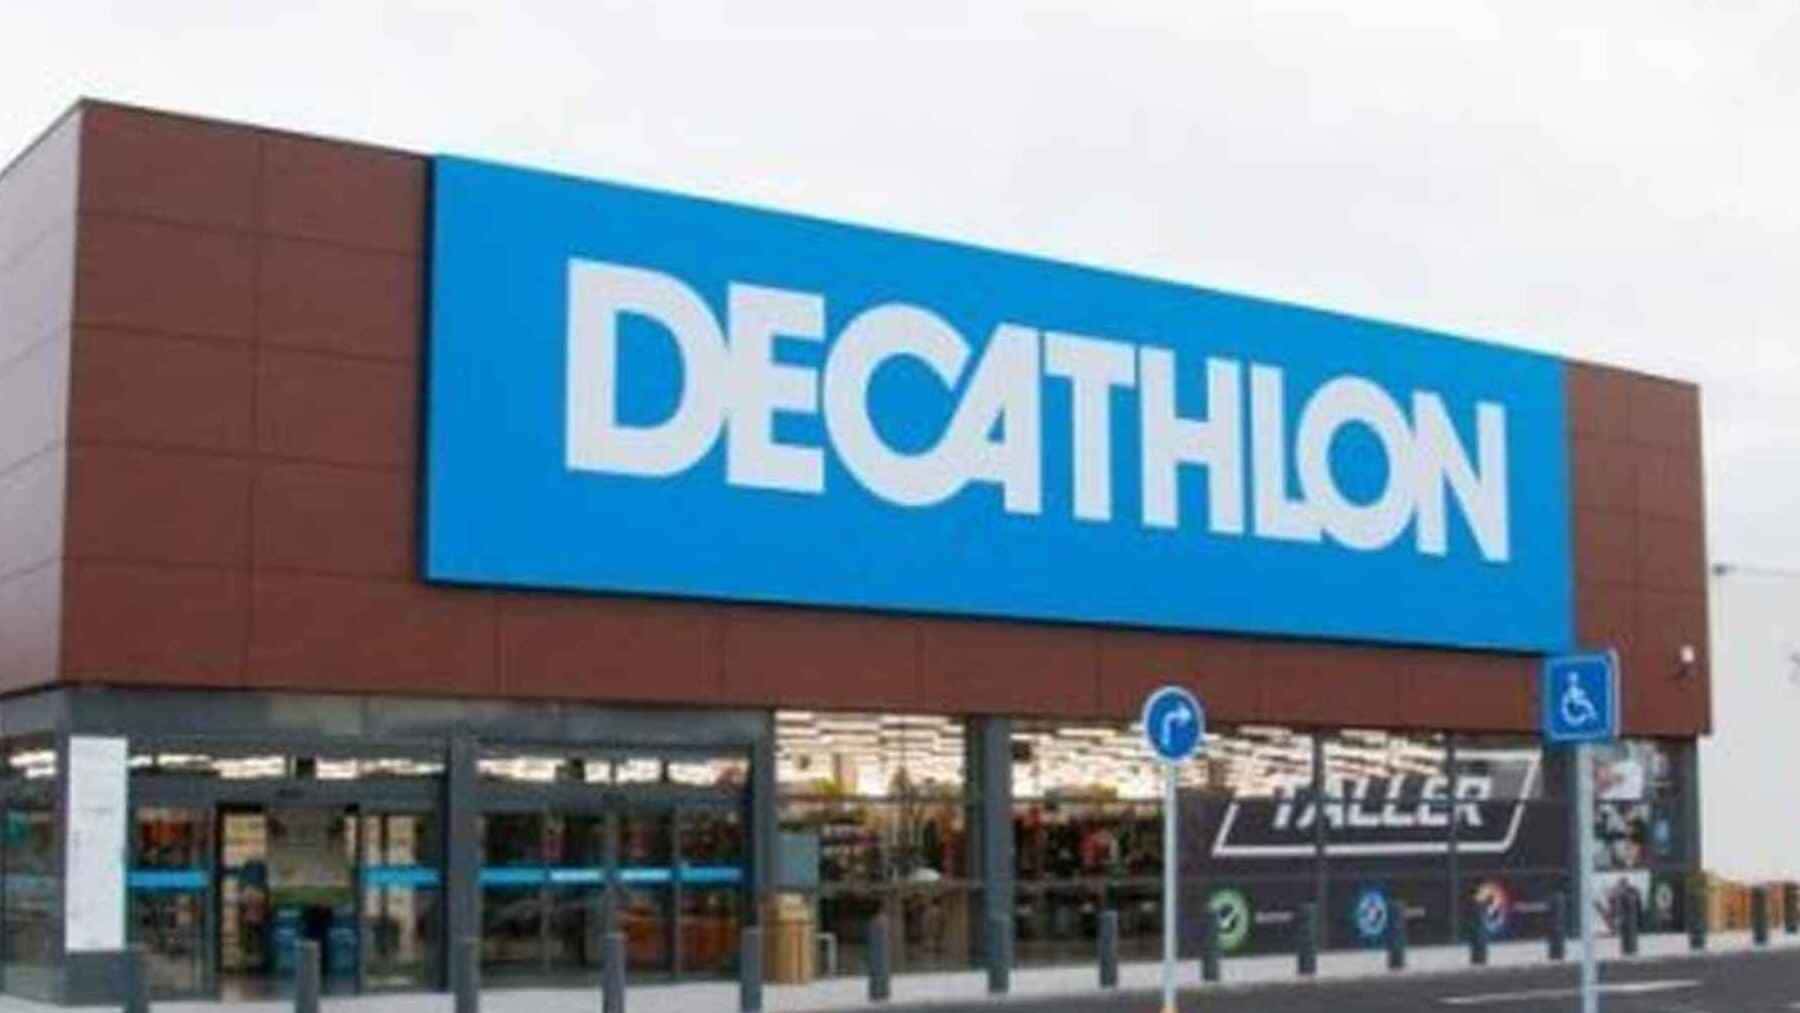 Dectahlon